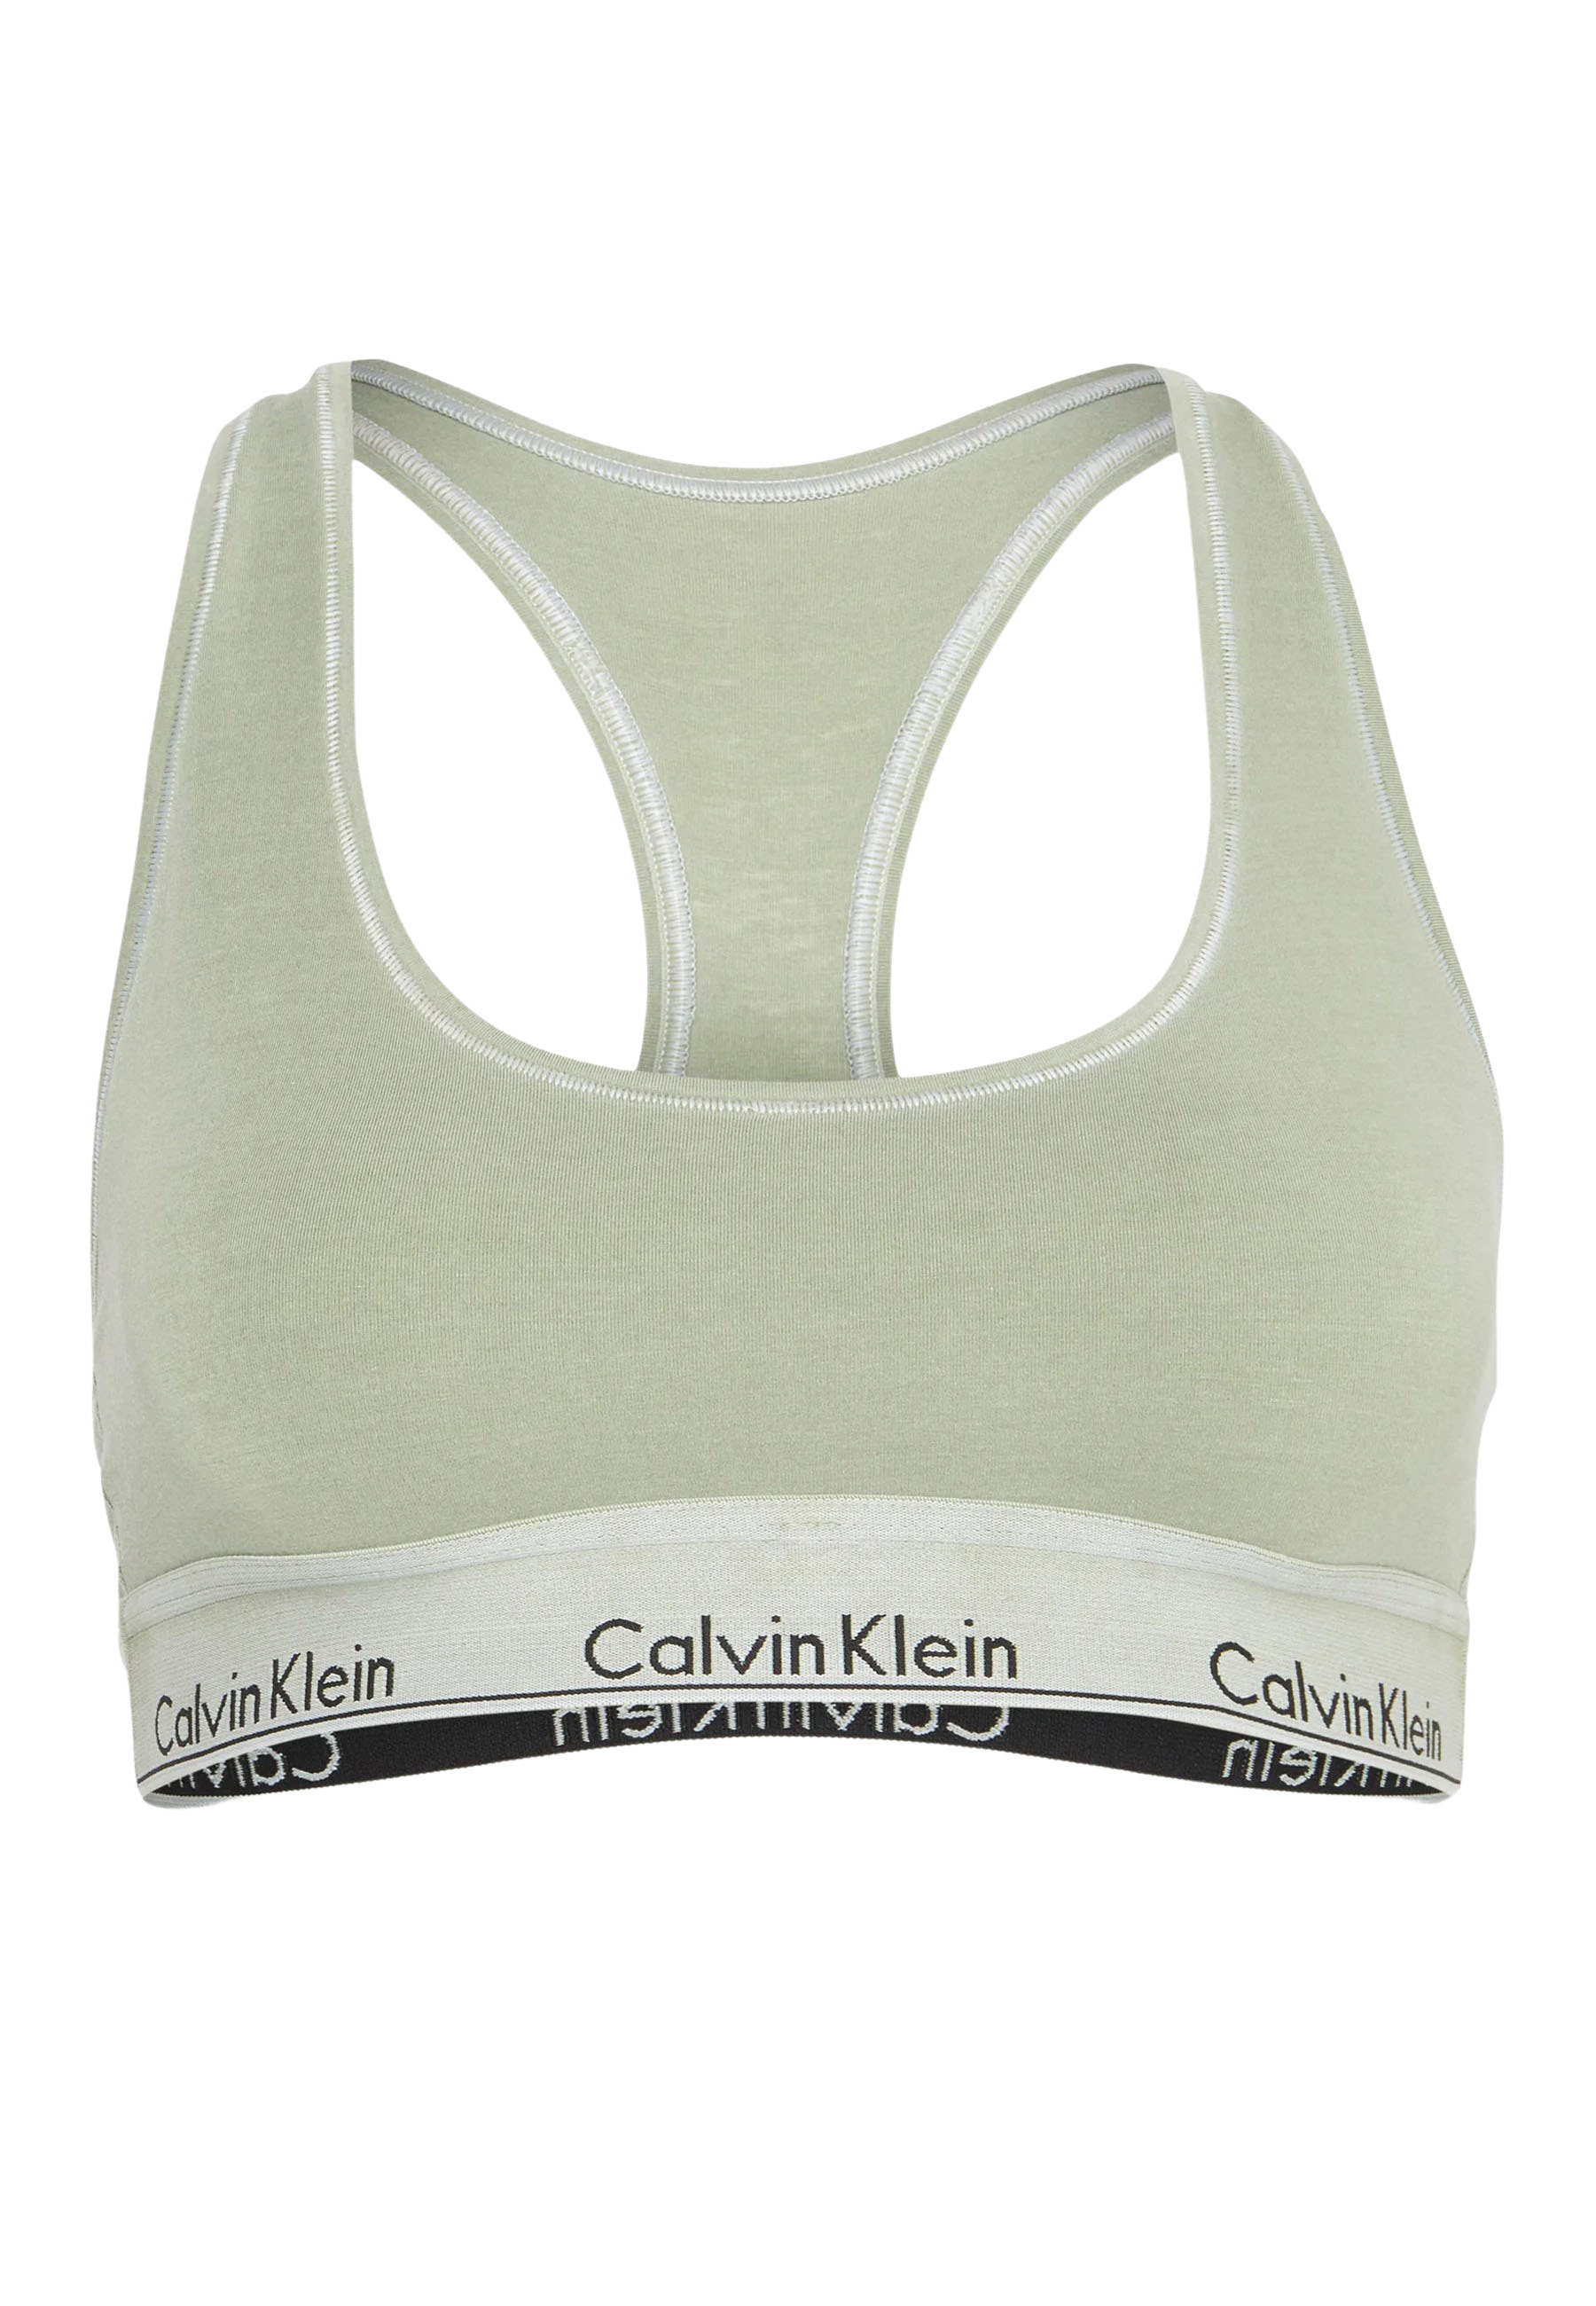 Calvin Klein sport bhs groen Dames maat L